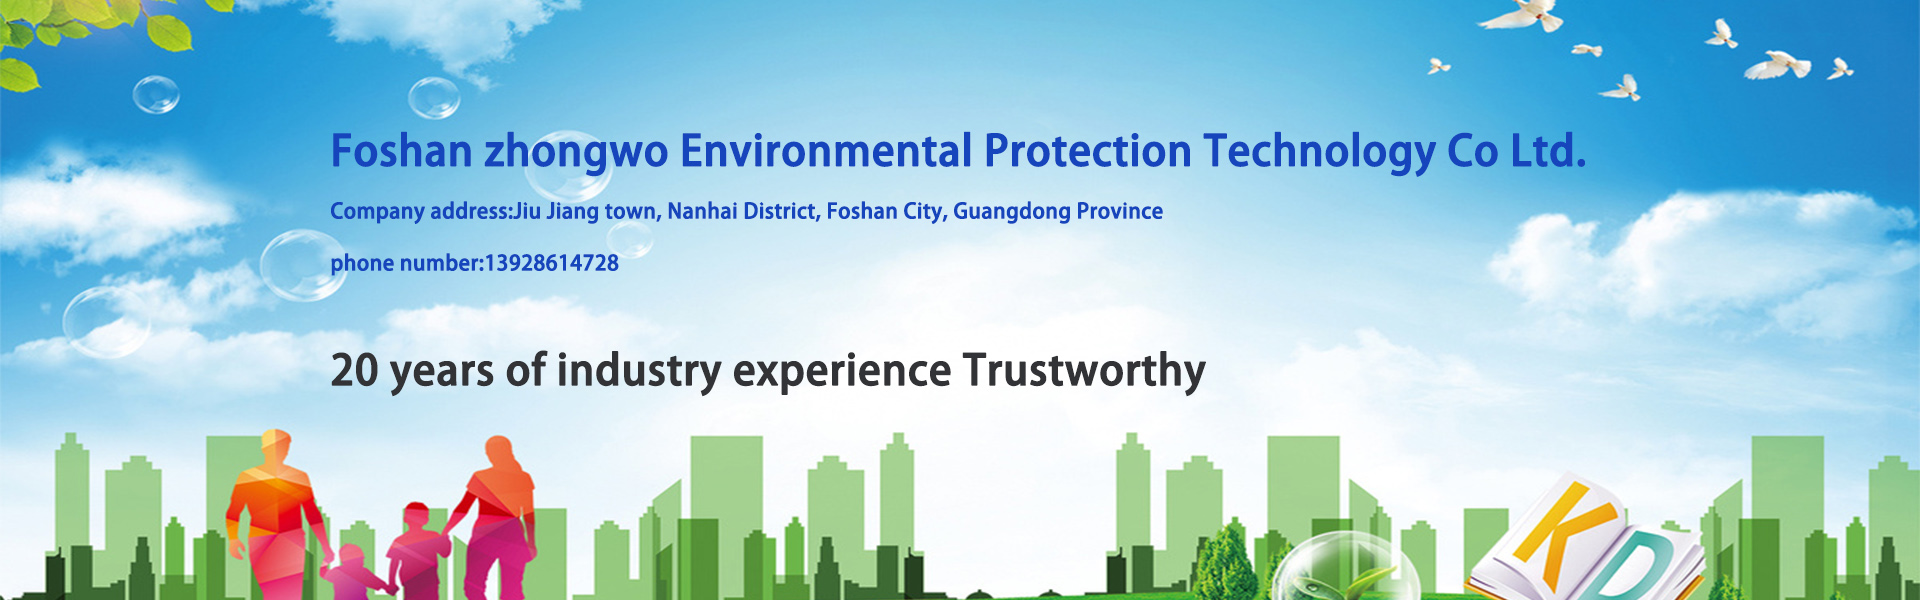 vattenreningsutrustning, vattenreningsutrustning, miljöskyddsutrustning,Foshan zhongwo Environmental Protection Technology Co Ltd.